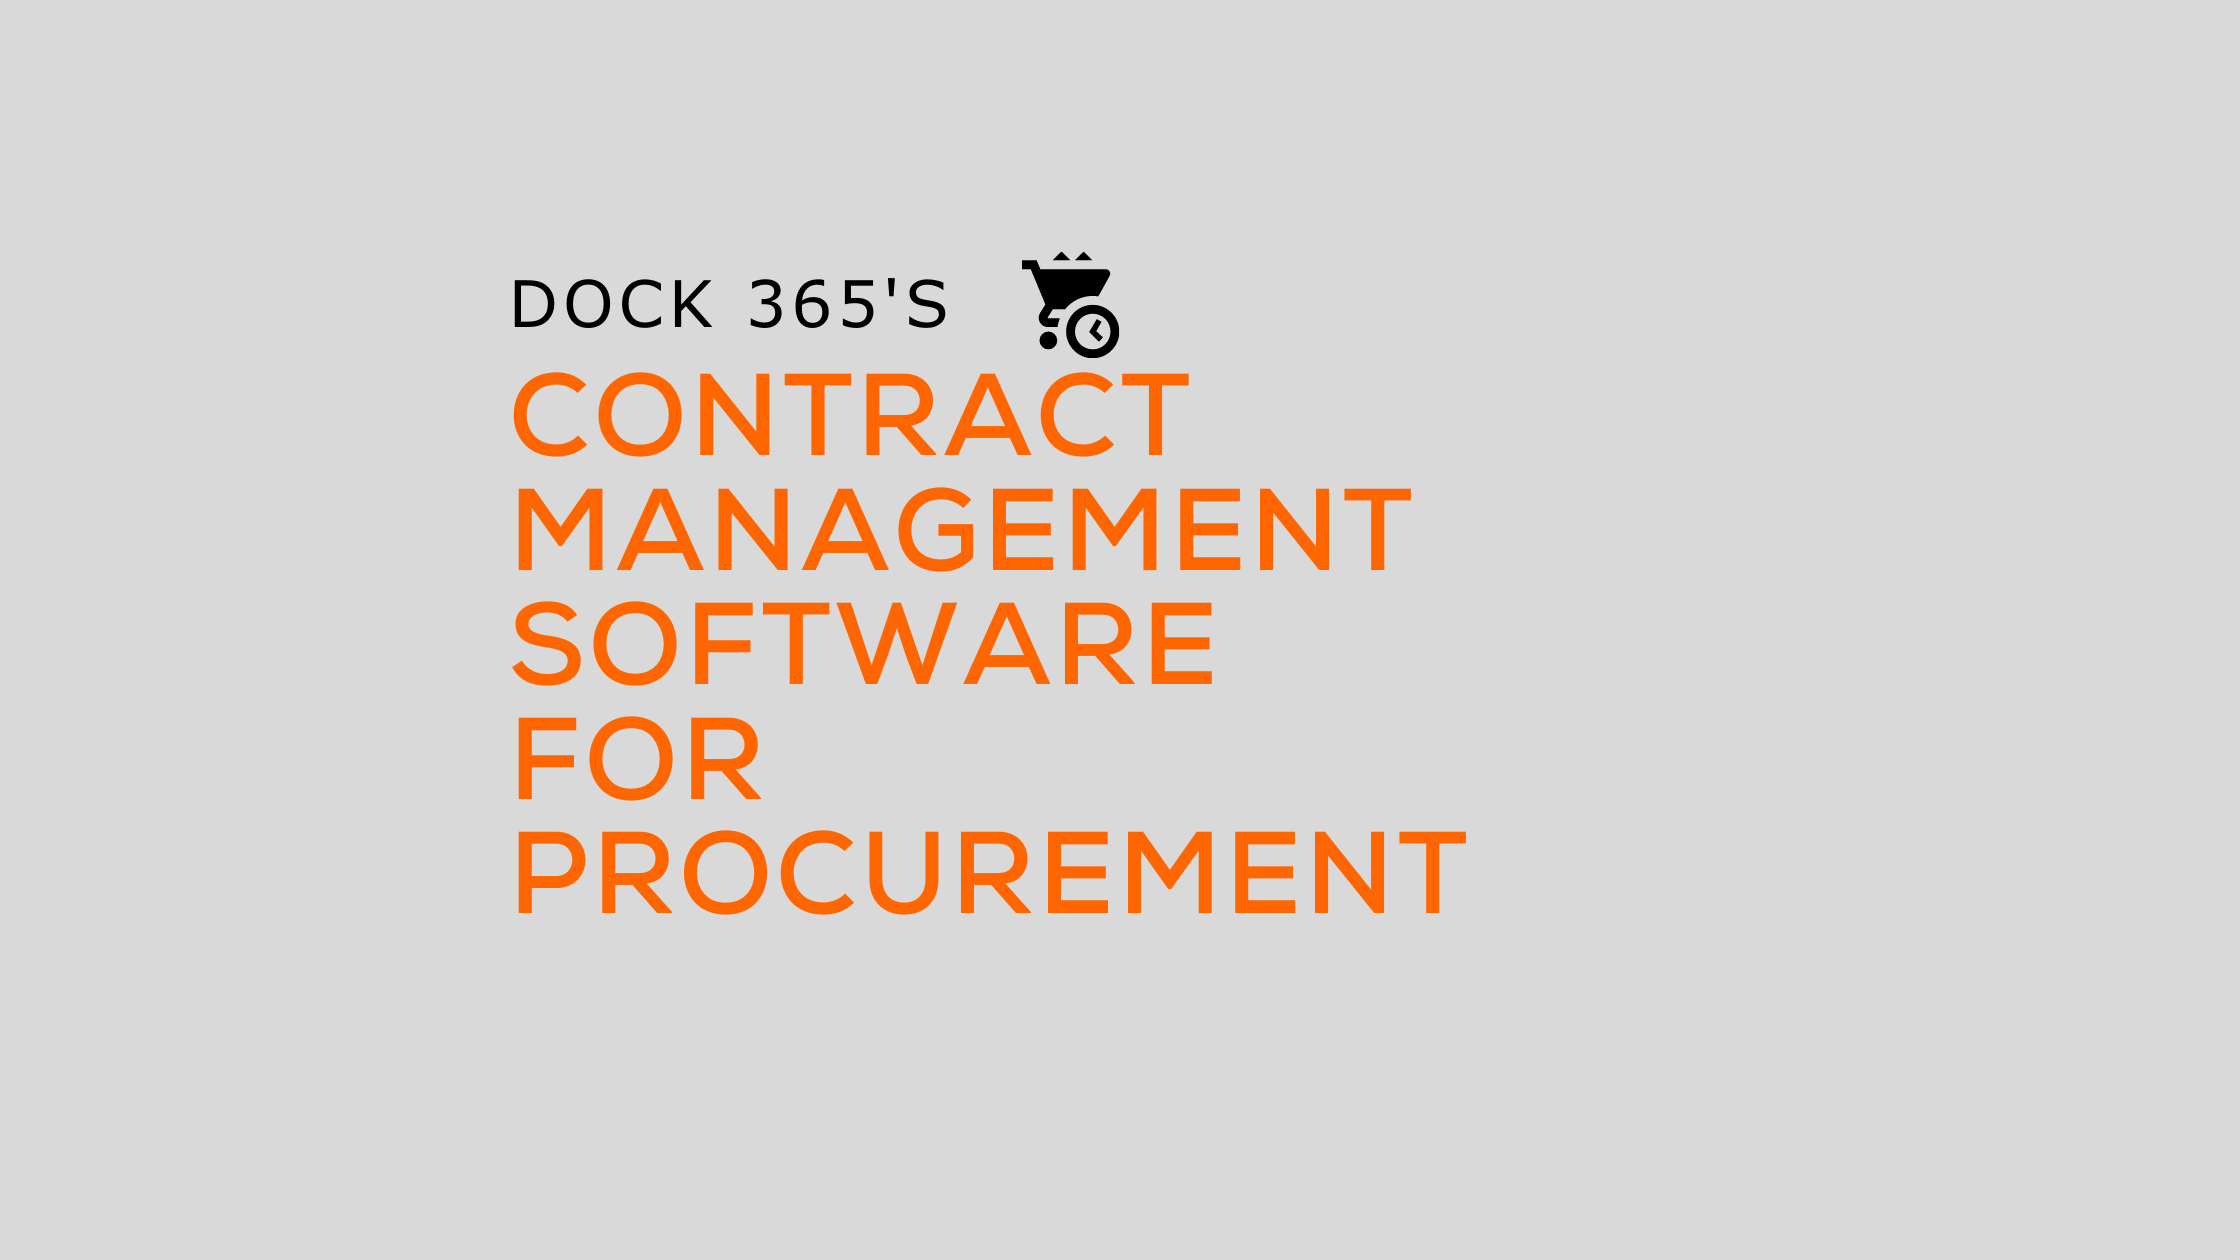 Contract Management Software for Procurement | Dock 365 Inc.